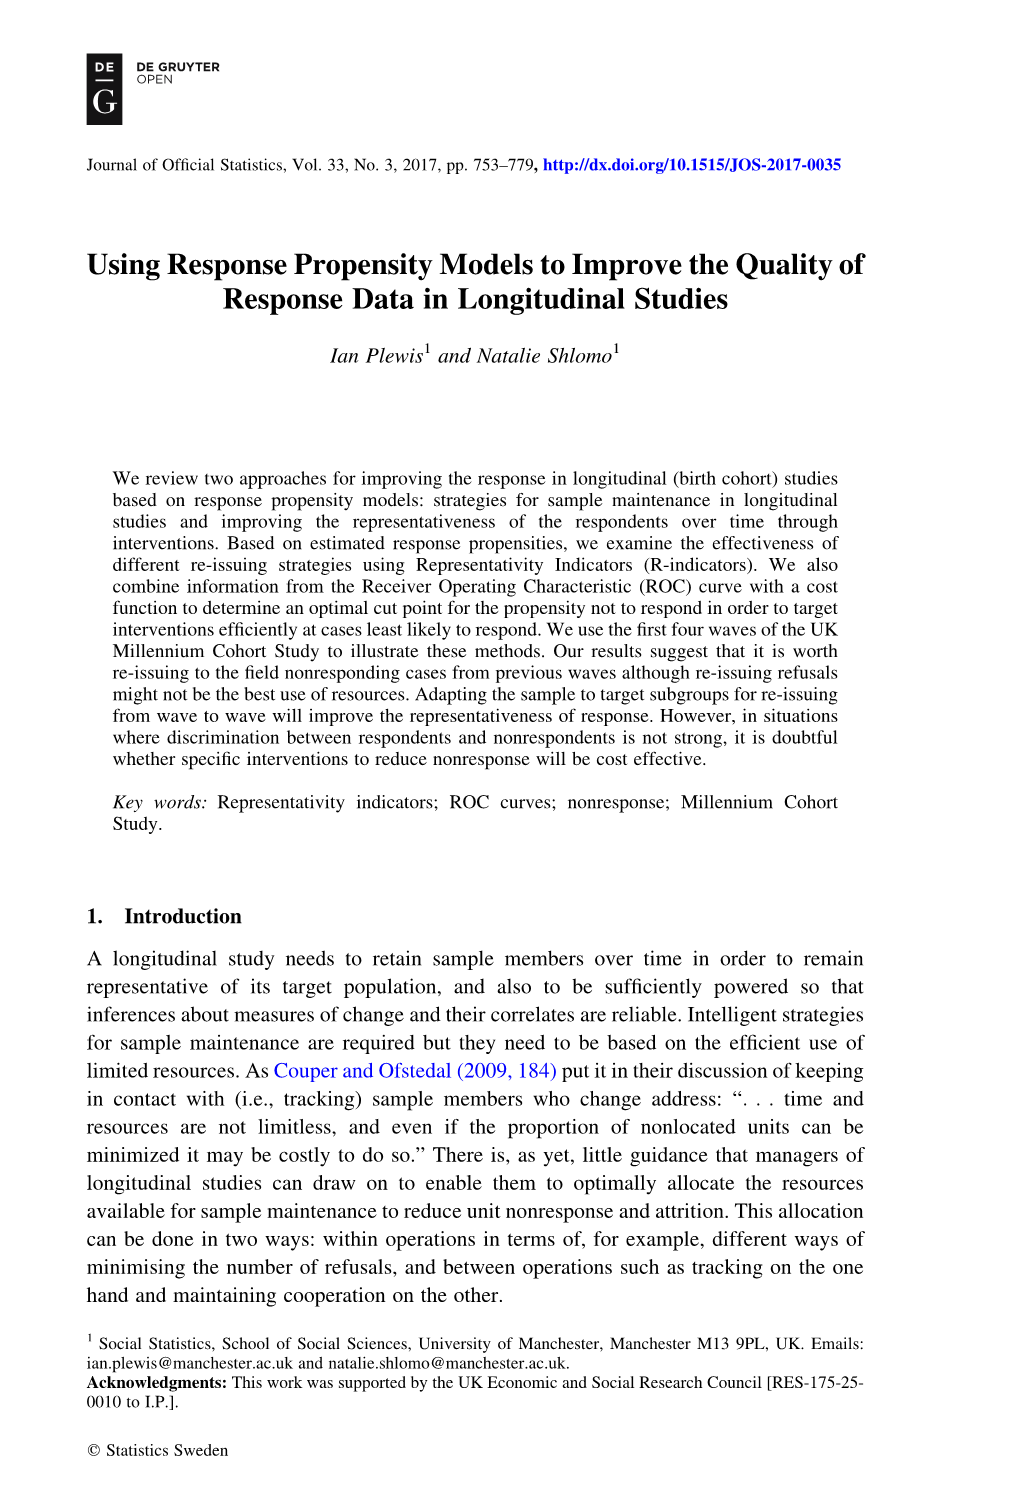 Using Response Propensity Models to Improve the Quality of Response Data in Longitudinal Studies